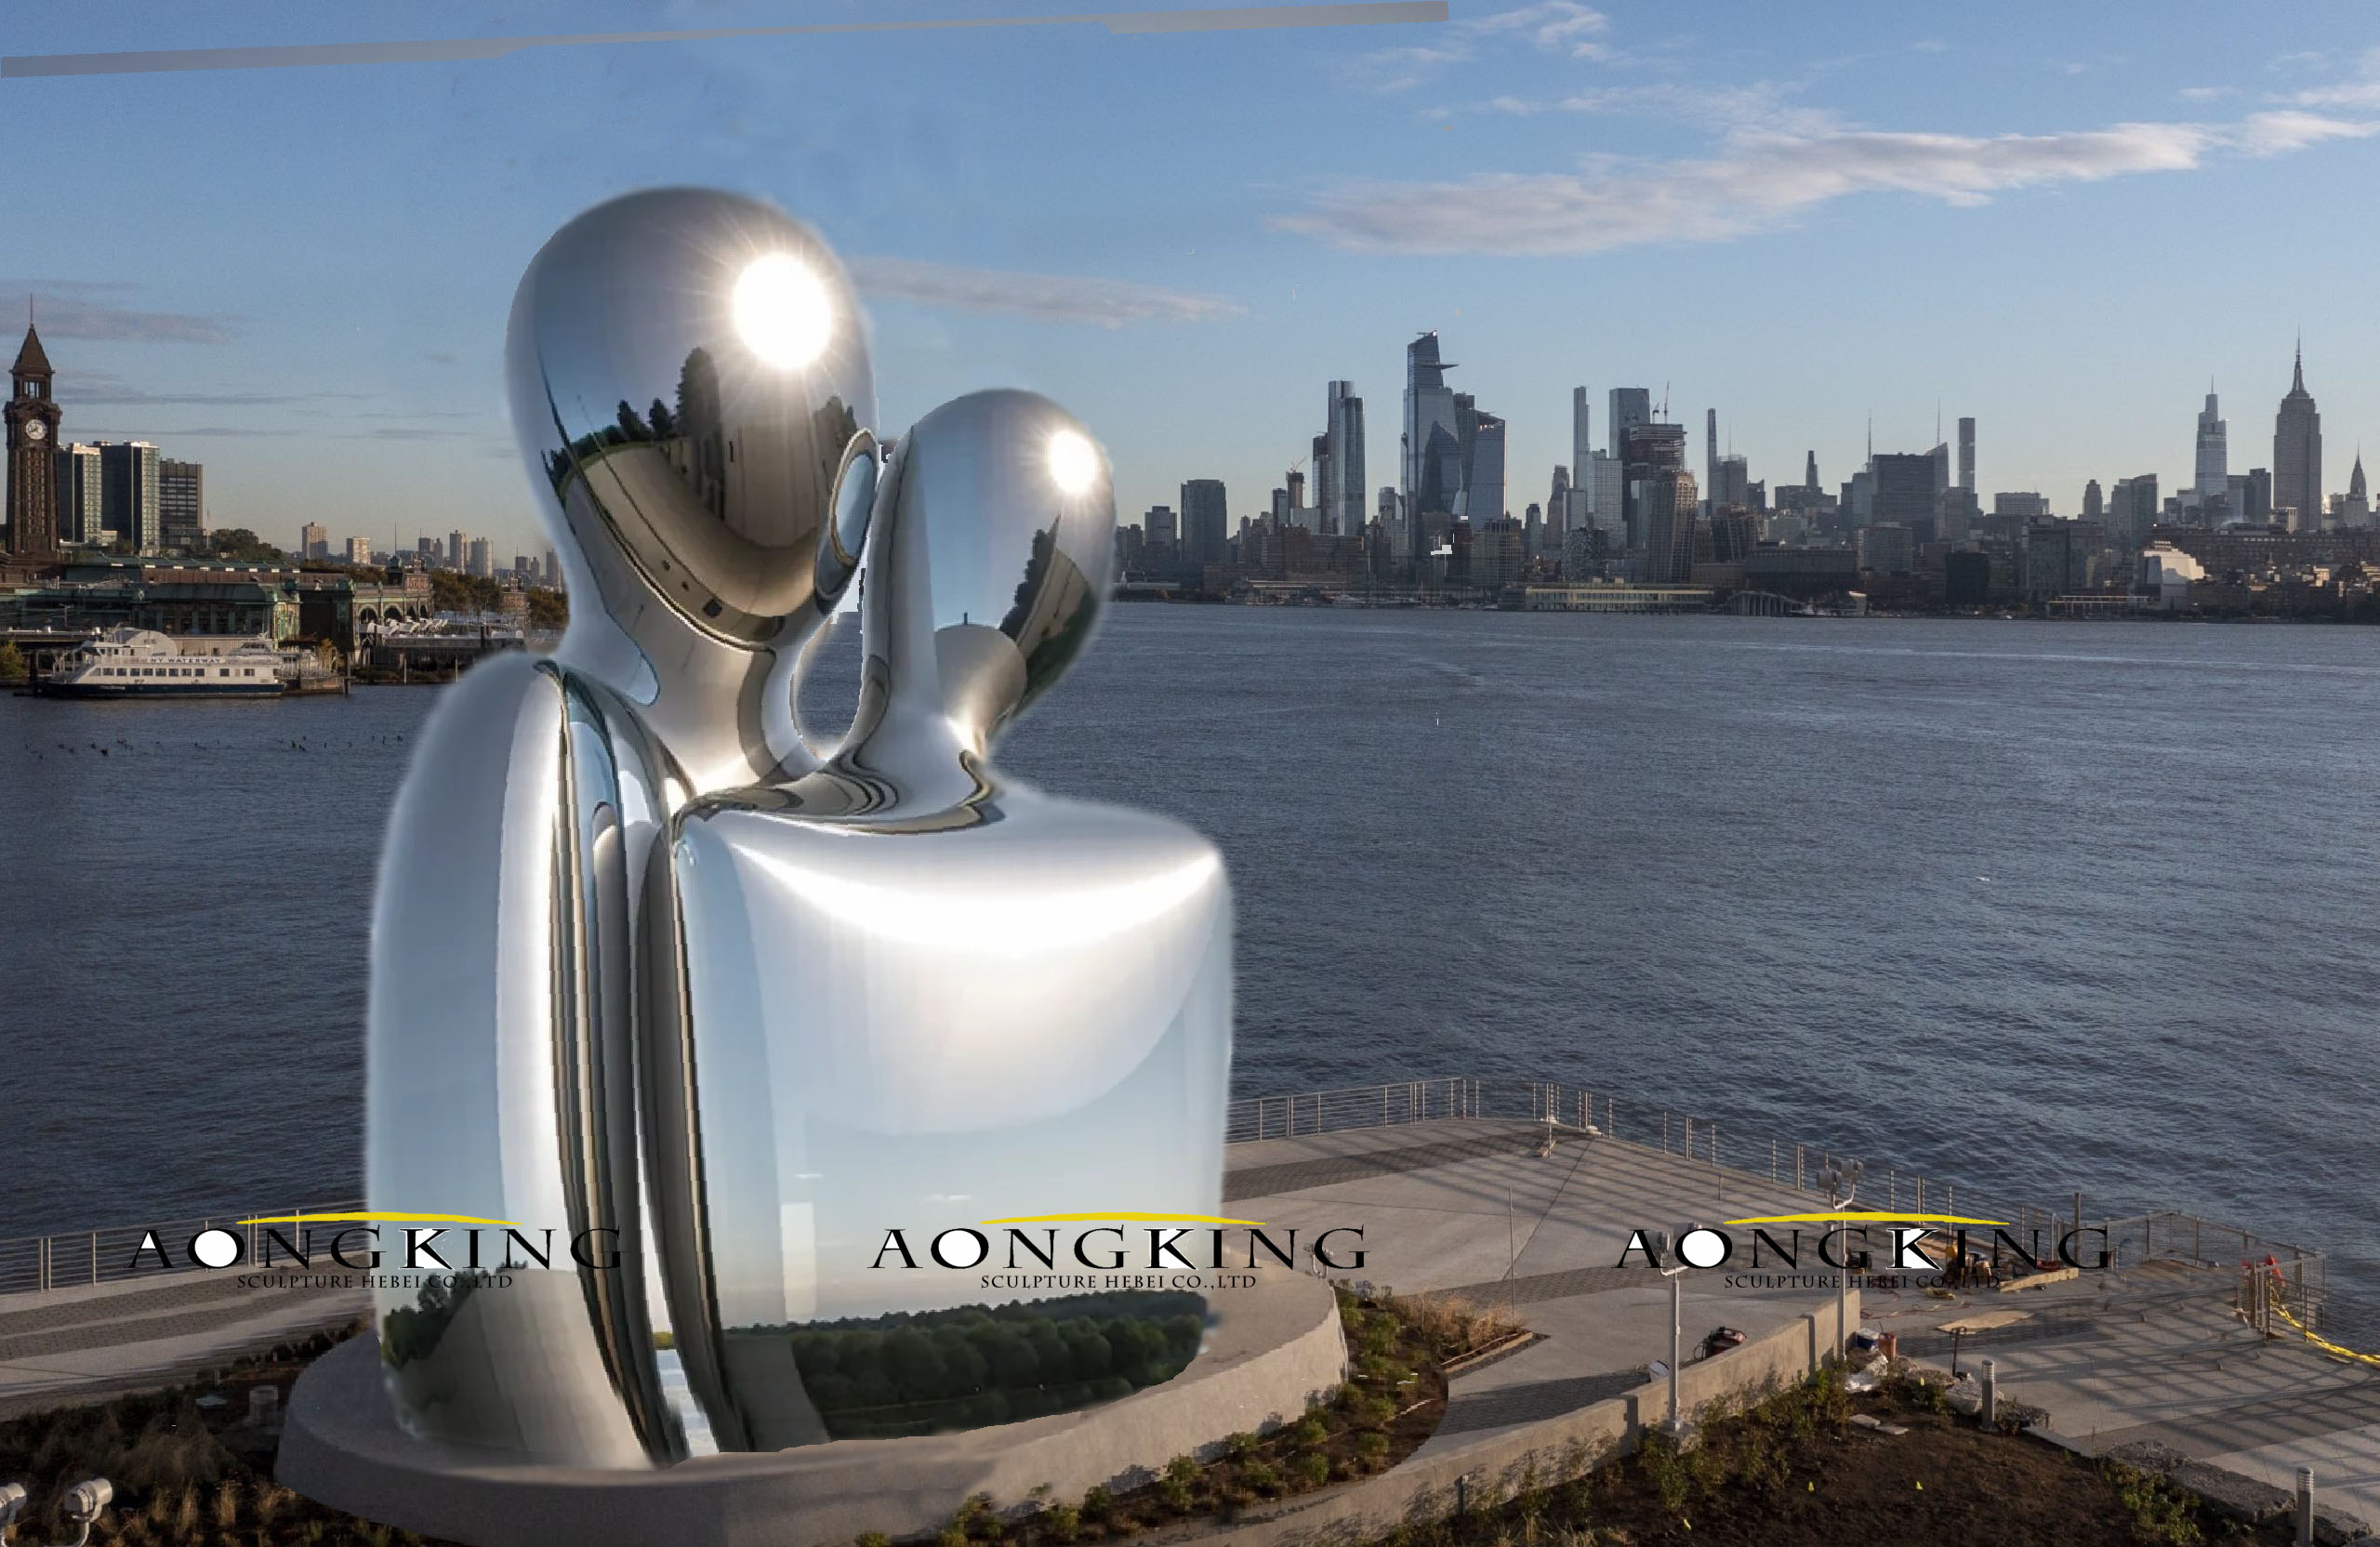 Publick sculpture, stainless steel sculpture - - love in the wild